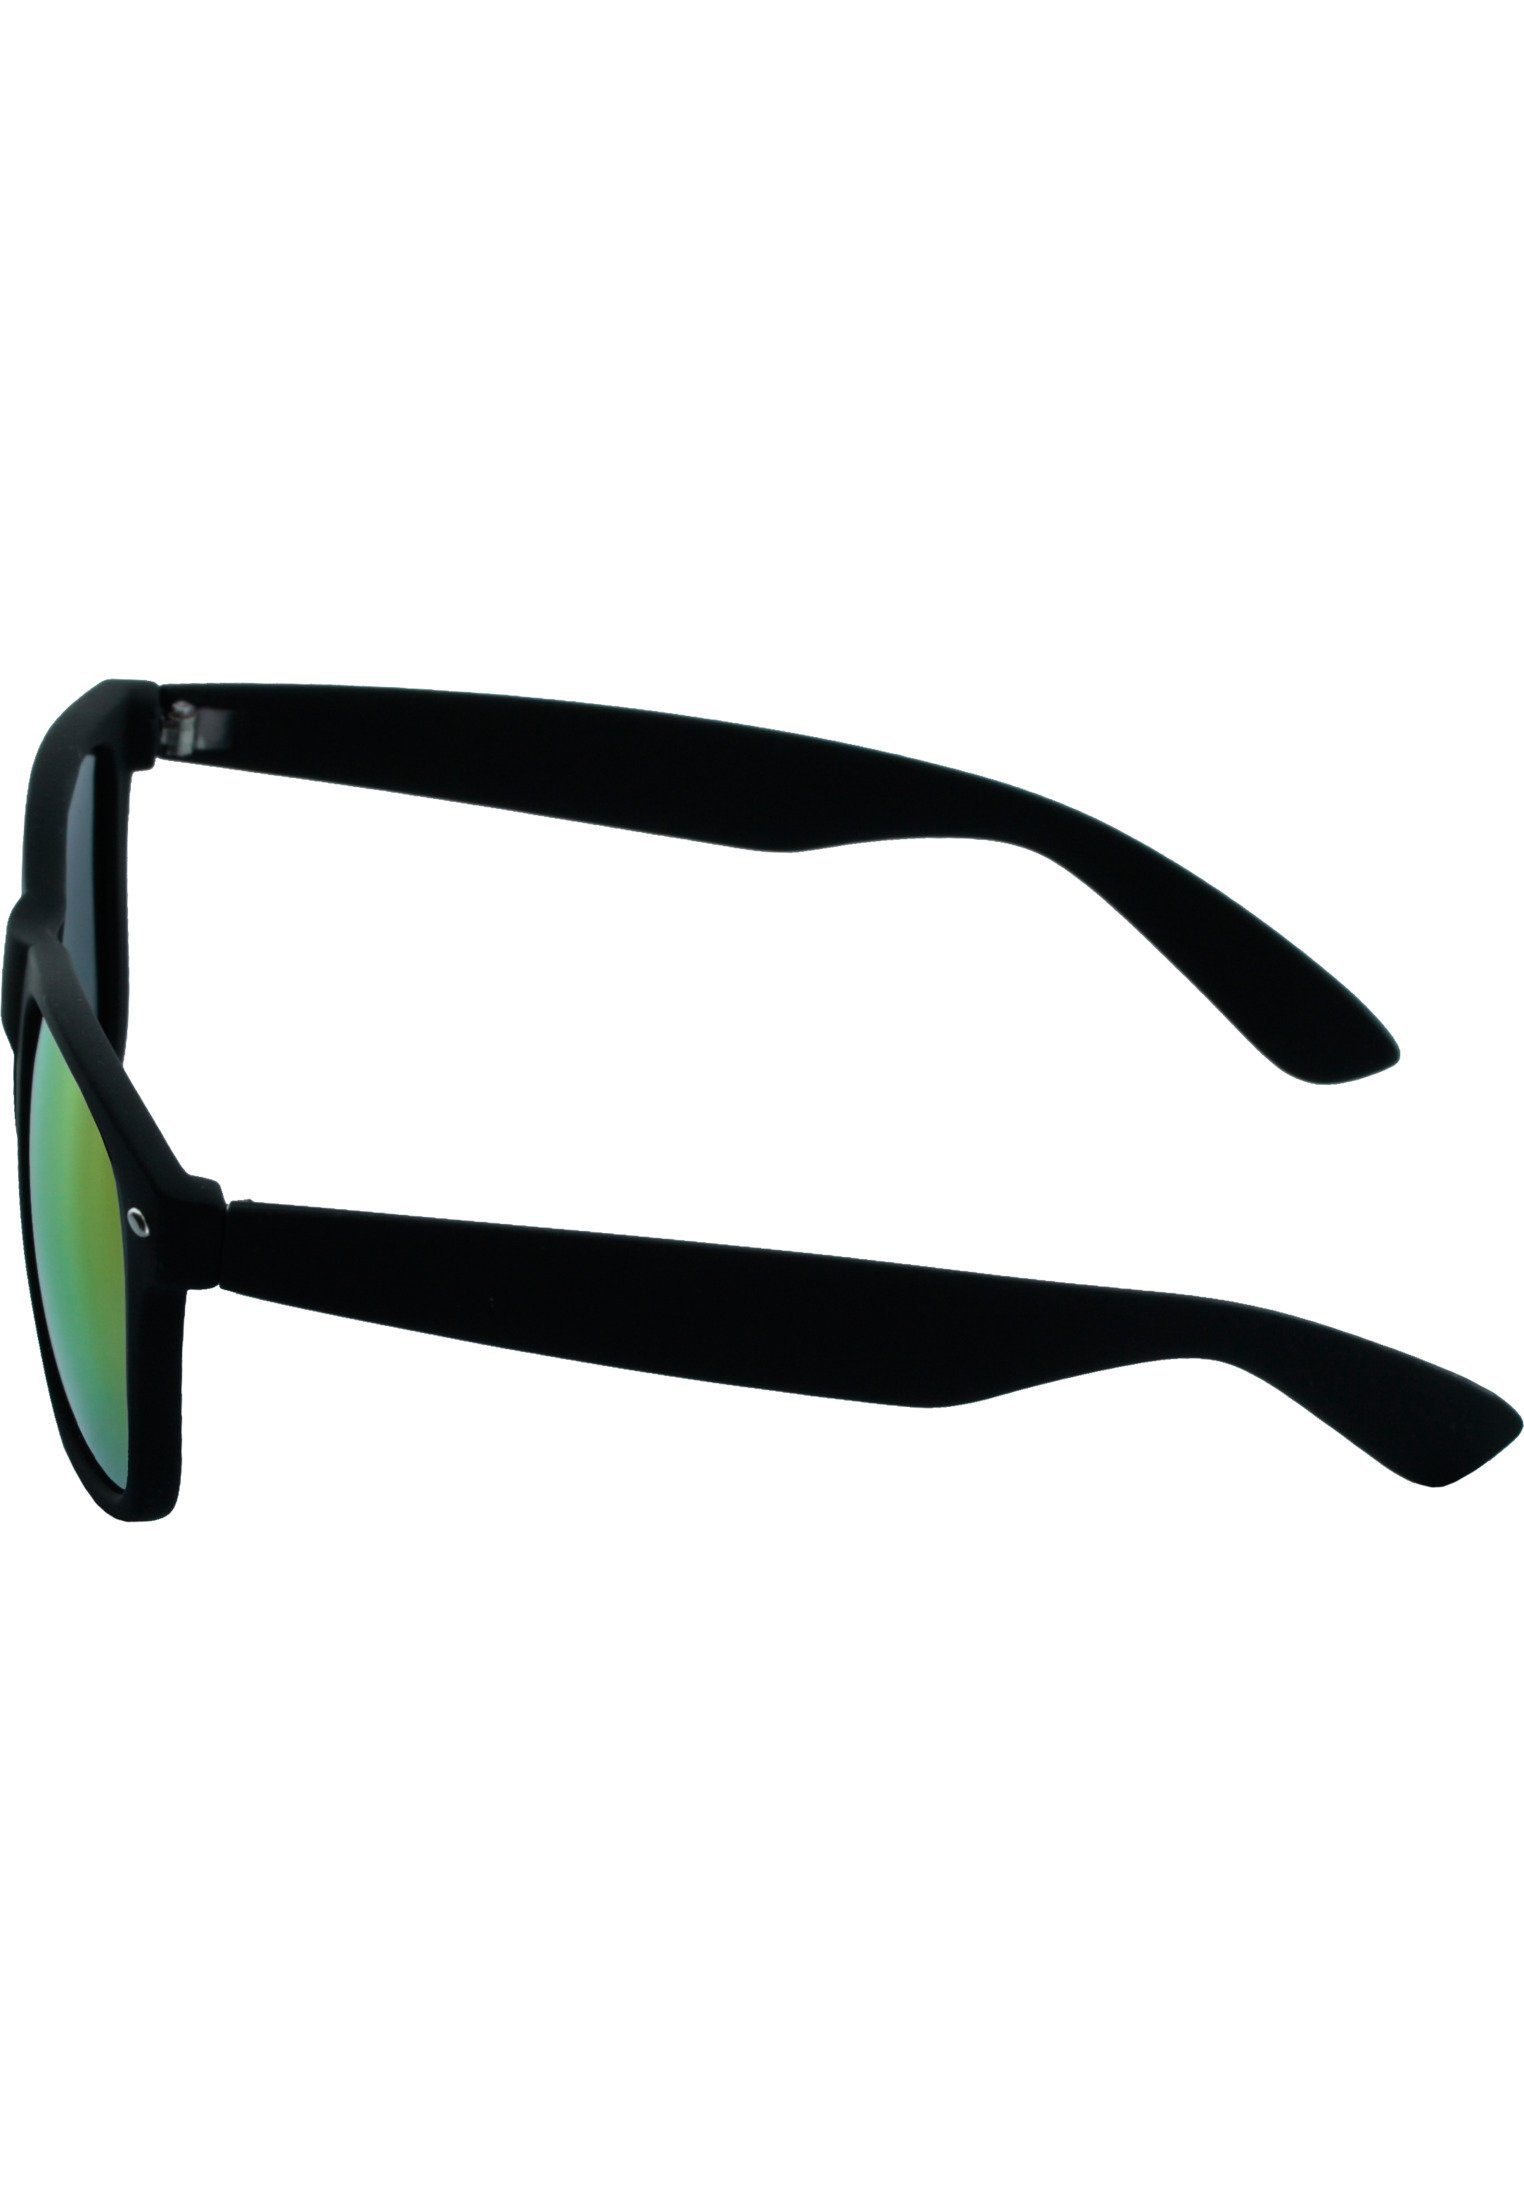 blk/grn Mirror Likoma Sonnenbrille MSTRDS Accessoires Sunglasses